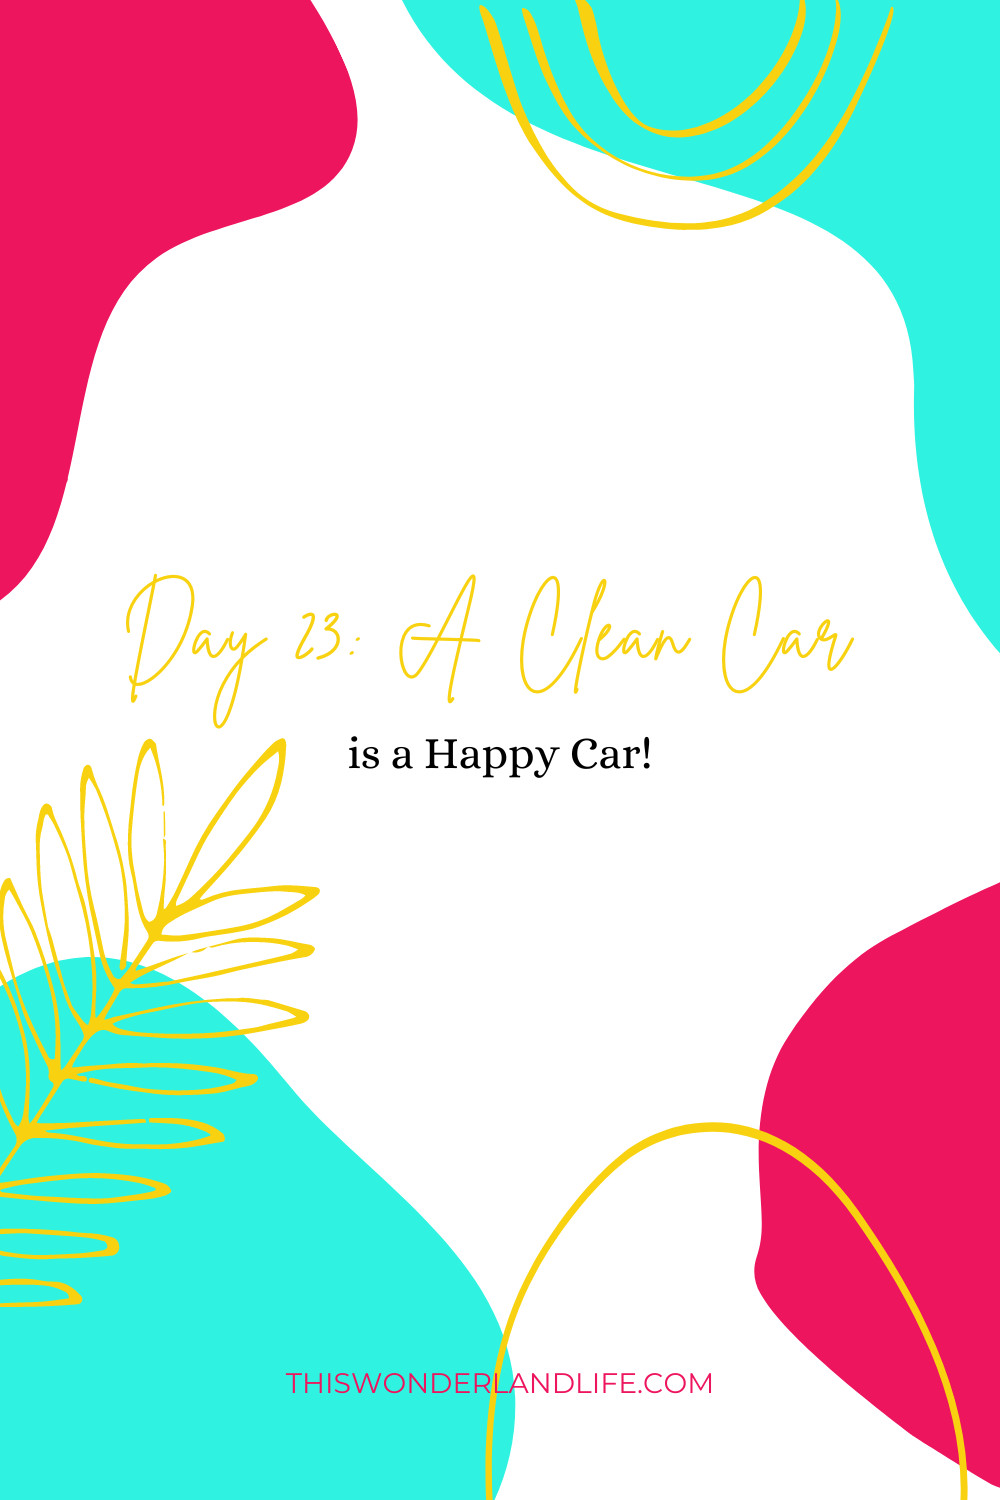 Day 23: A Clean Car is a Happy Car!